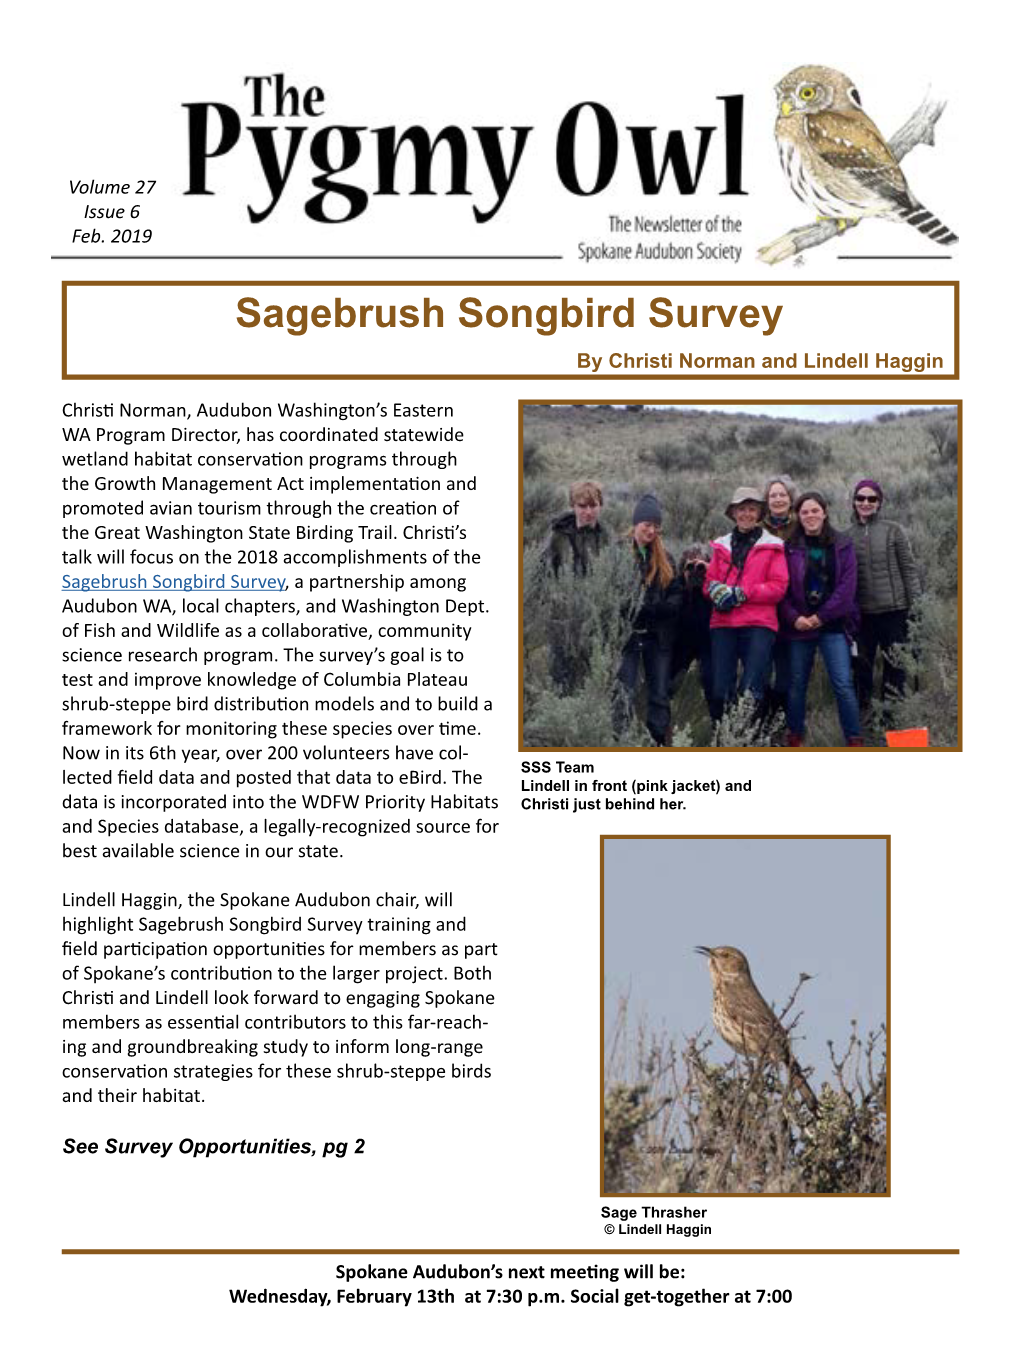 Sagebrush Songbird Survey by Christi Norman and Lindell Haggin